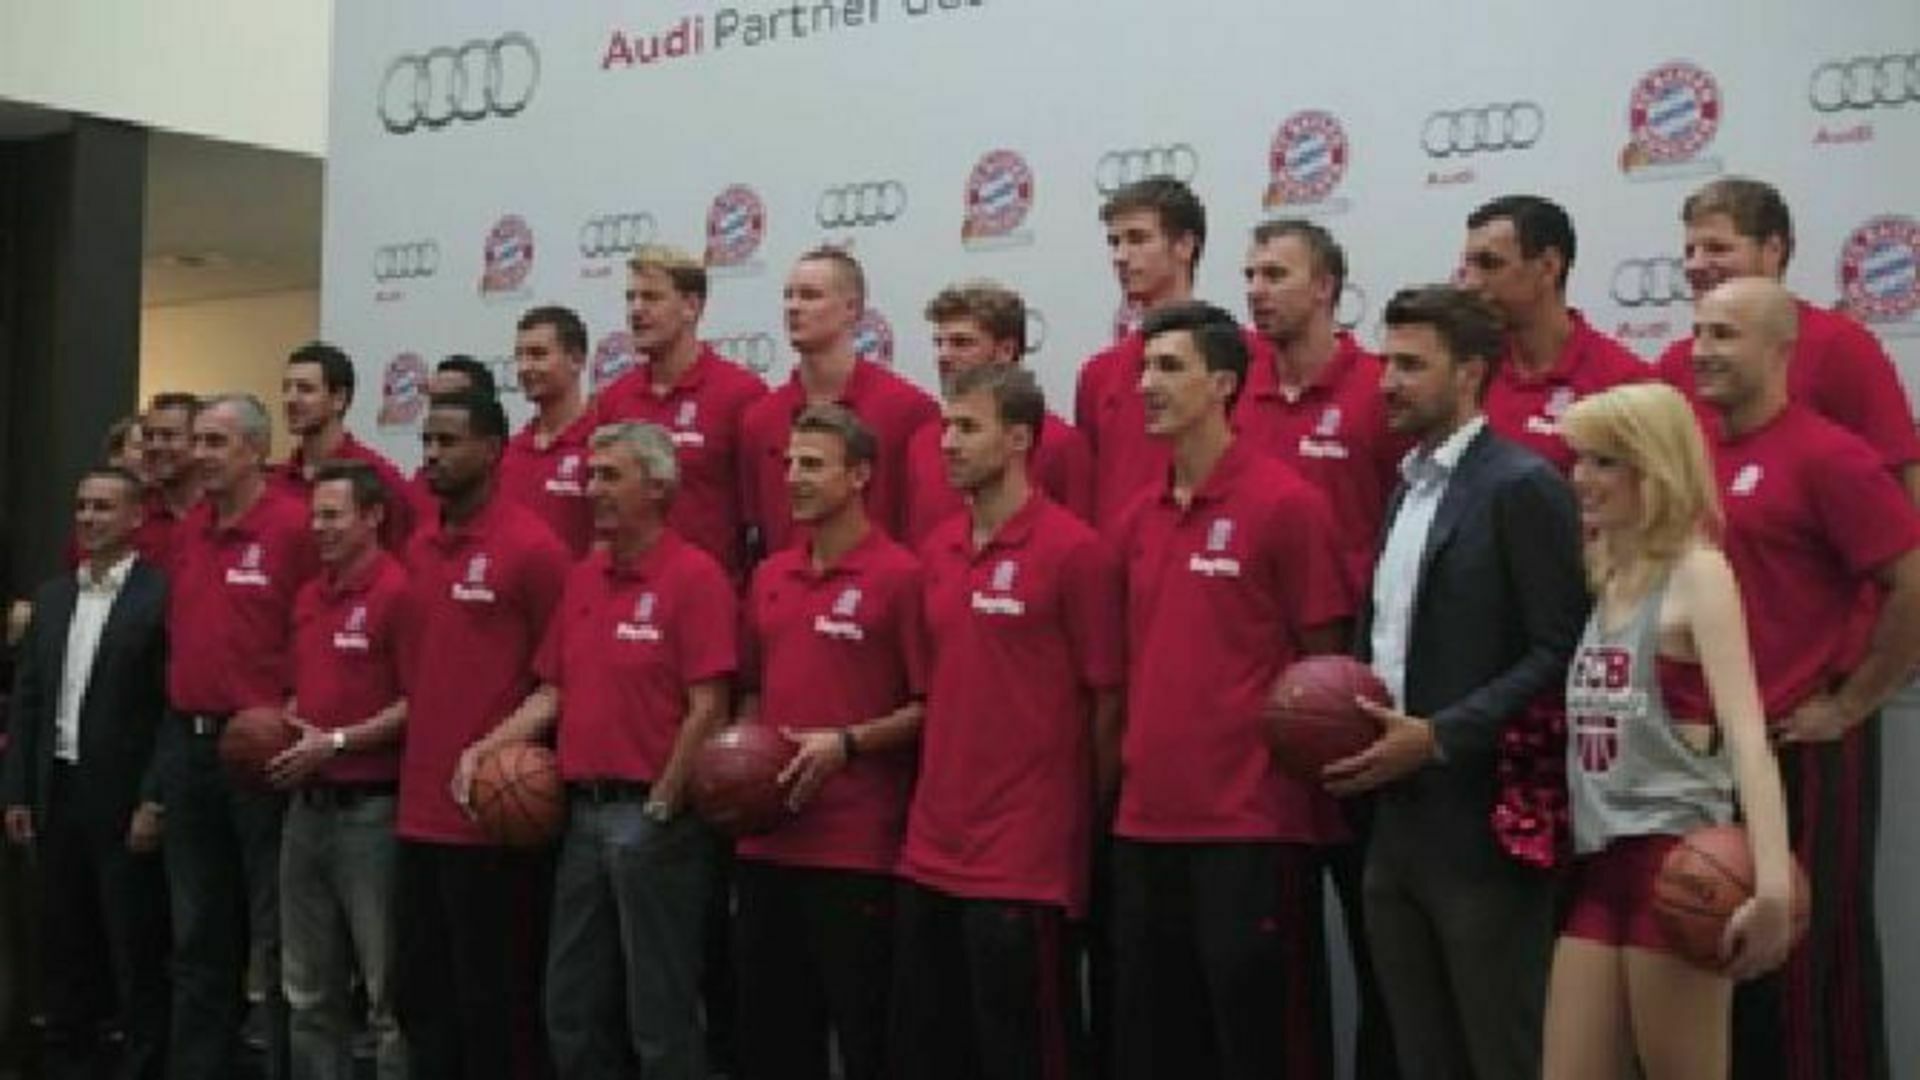 Audi models for German basketball champions